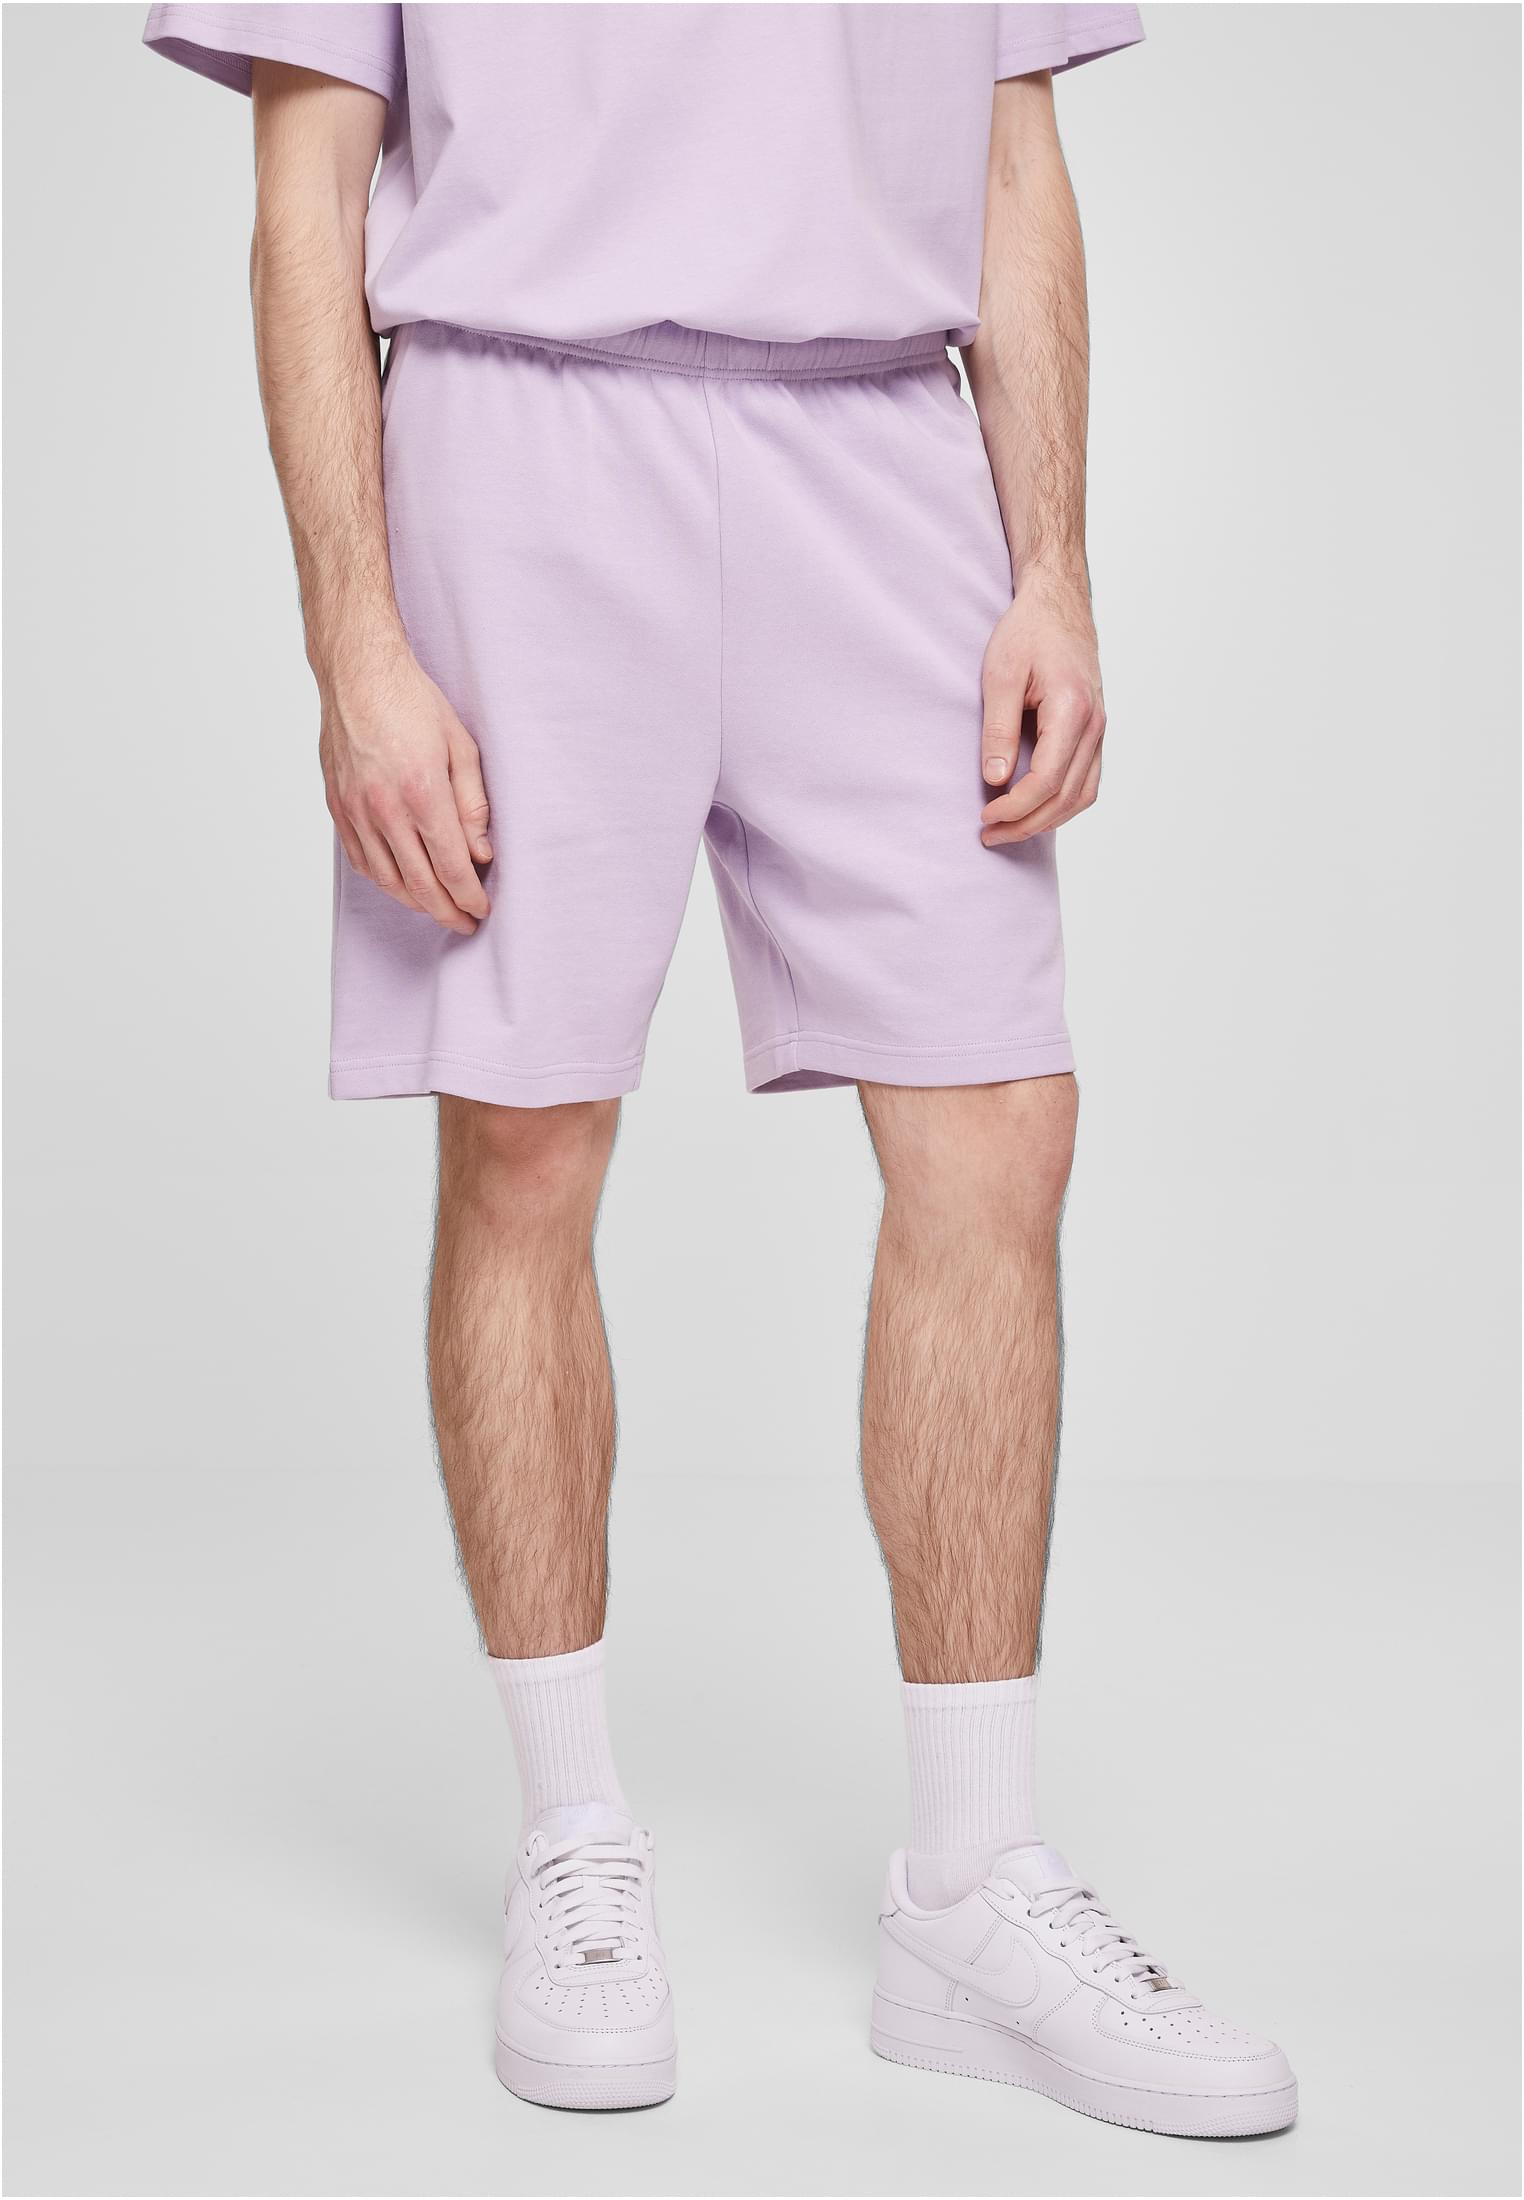 New lilac shorts